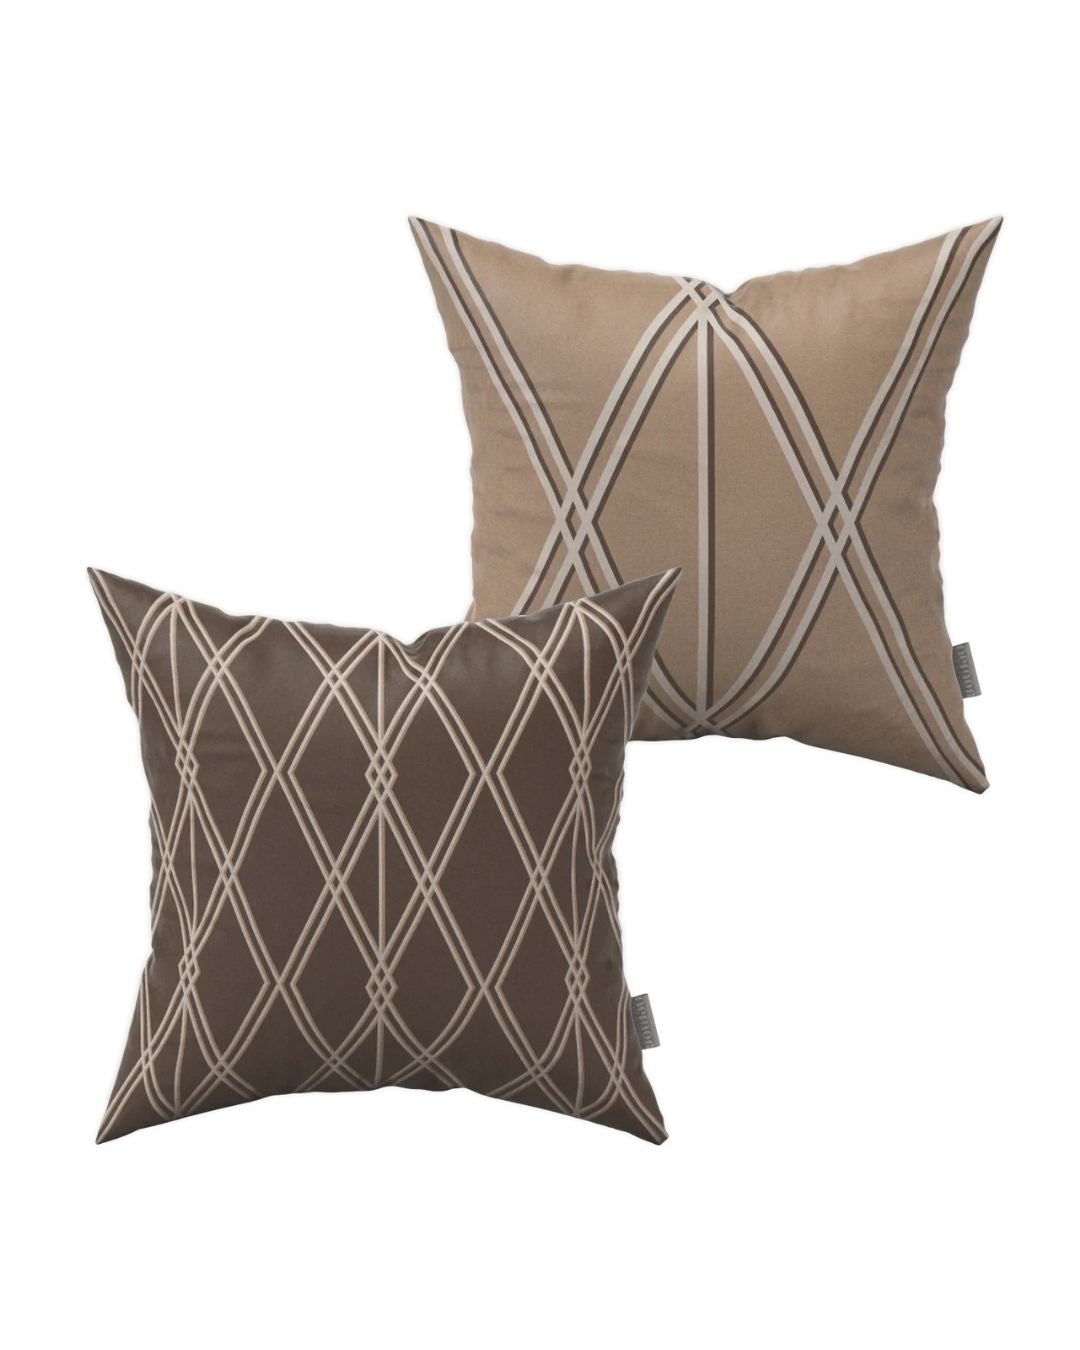 Alpin Beige & Moka Pillows - Set of 2